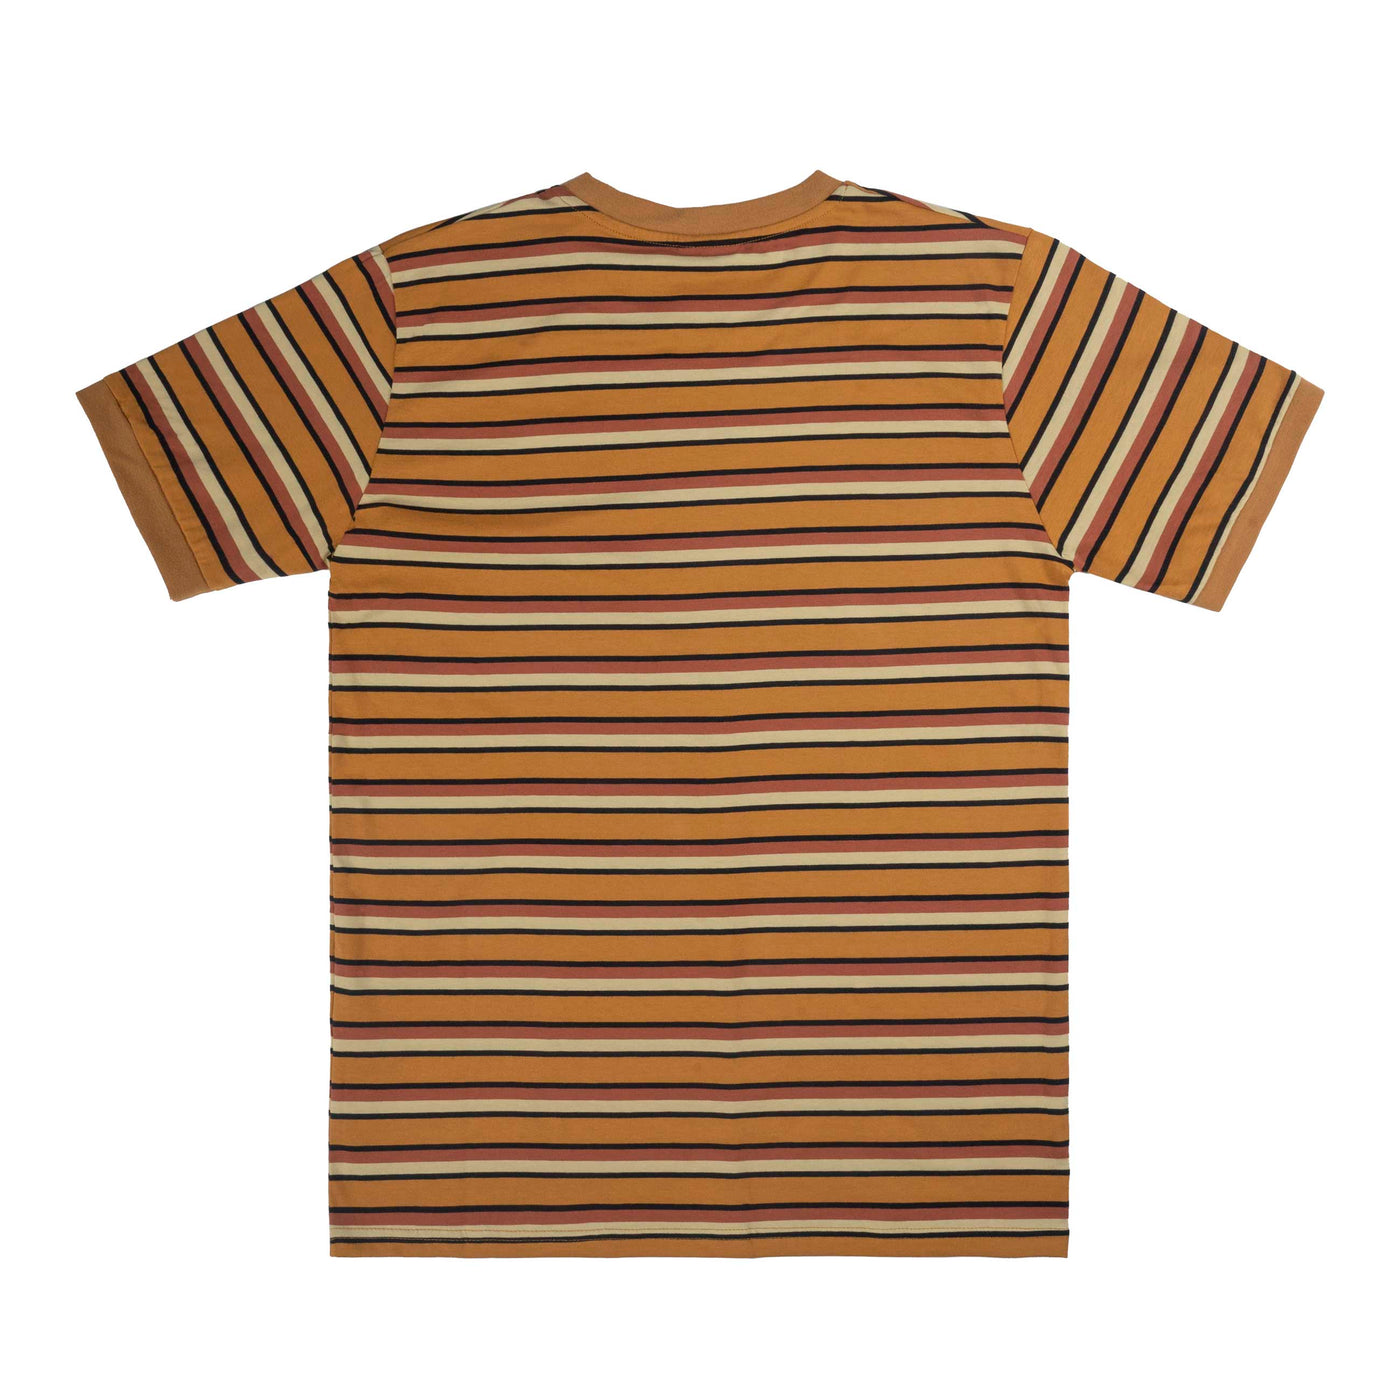 AMSCKS Striped Pale - Camiseta